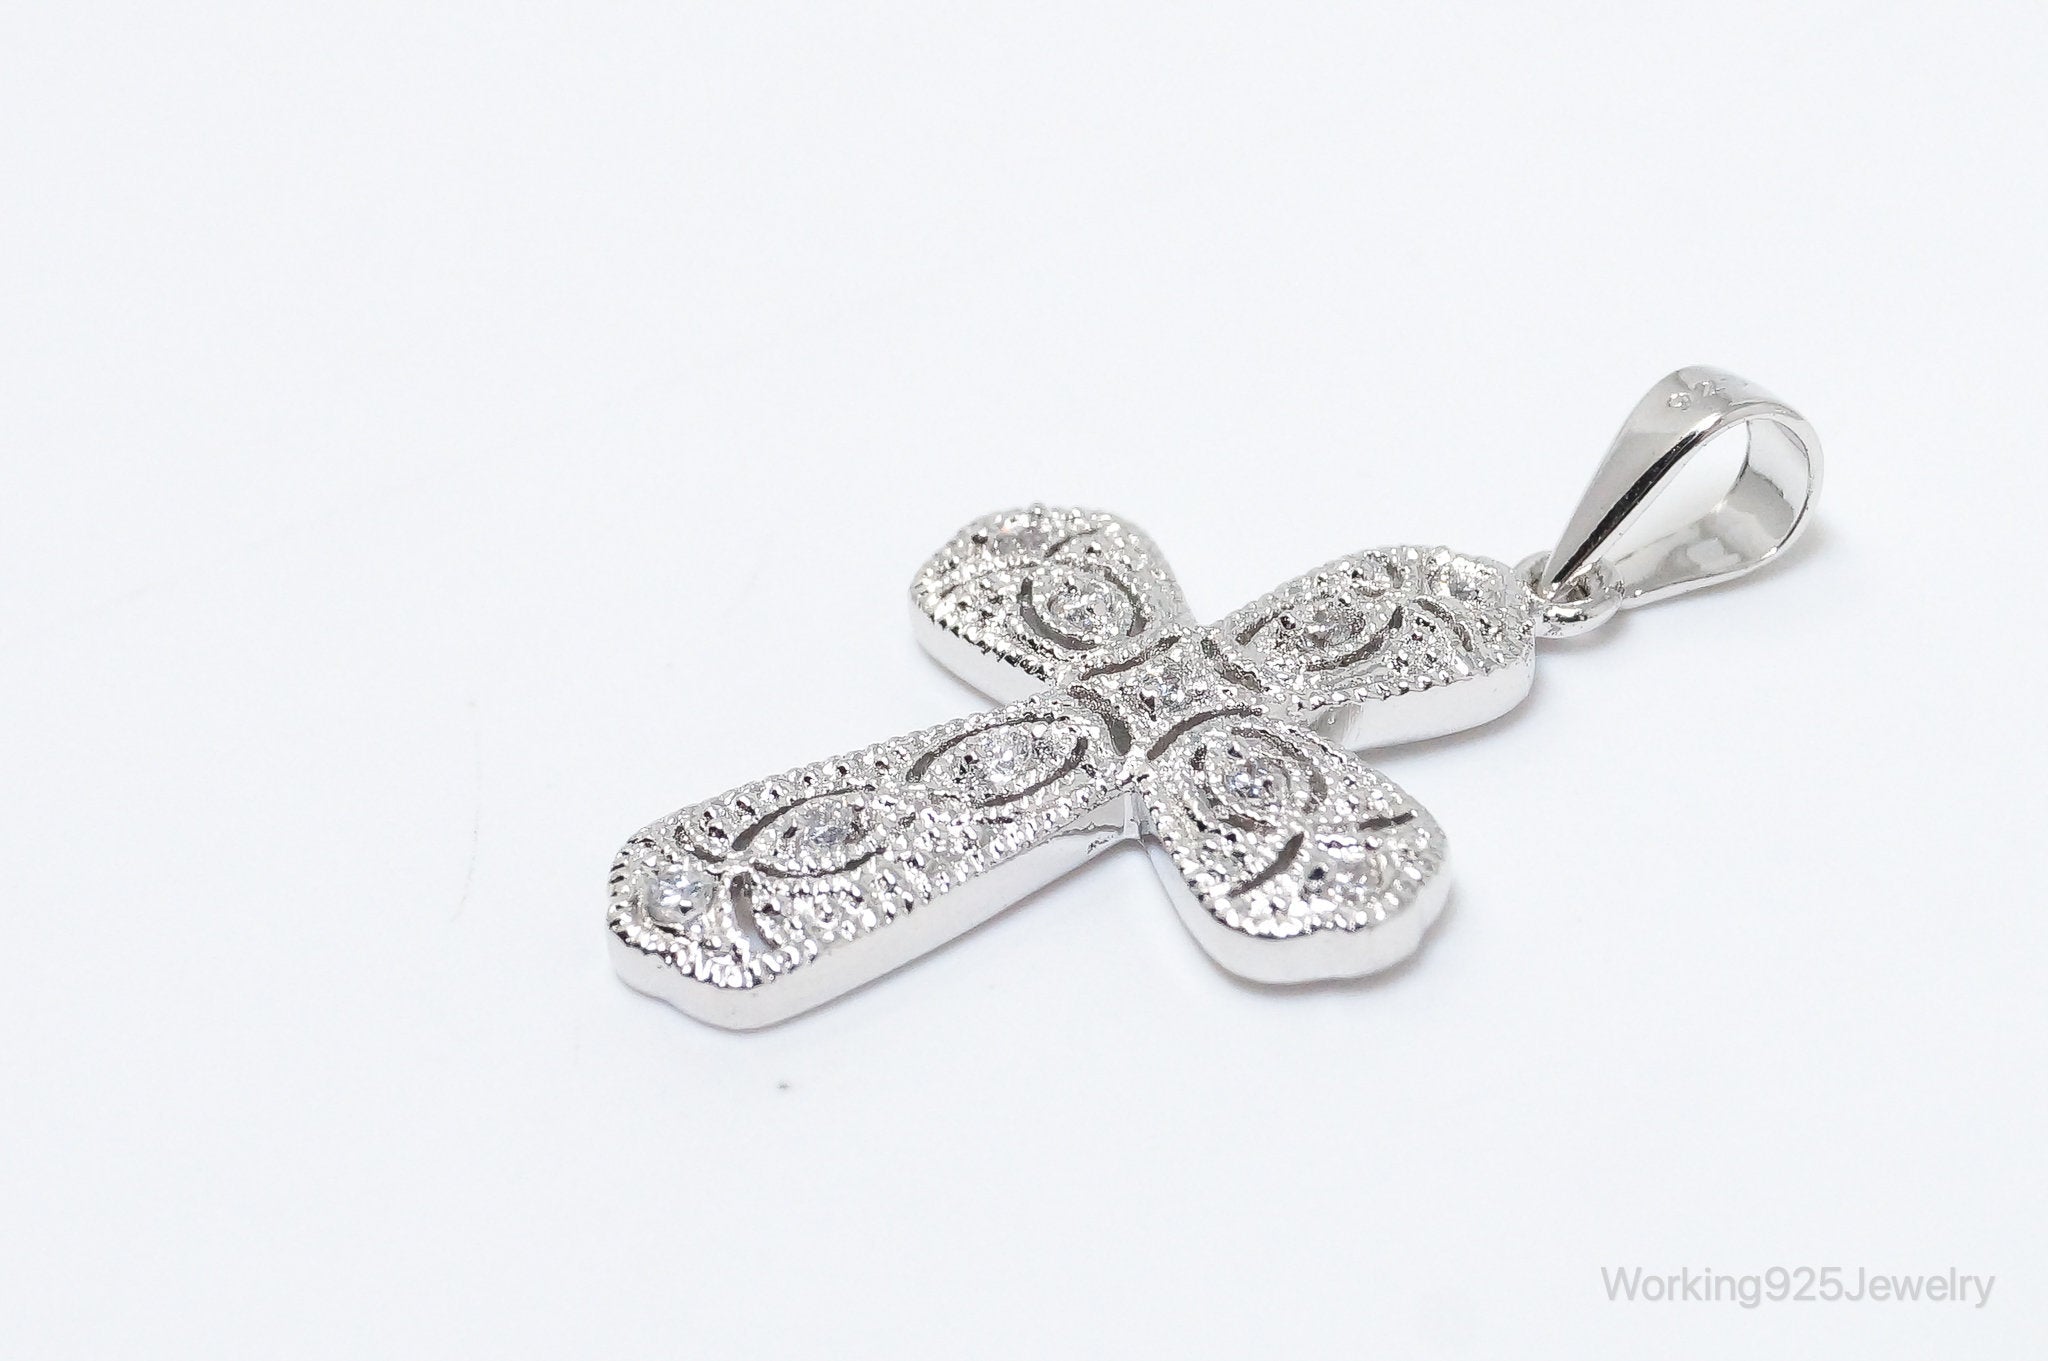 Designer FAS Cubic Zirconia Cross Sterling Silver Necklace Pendant